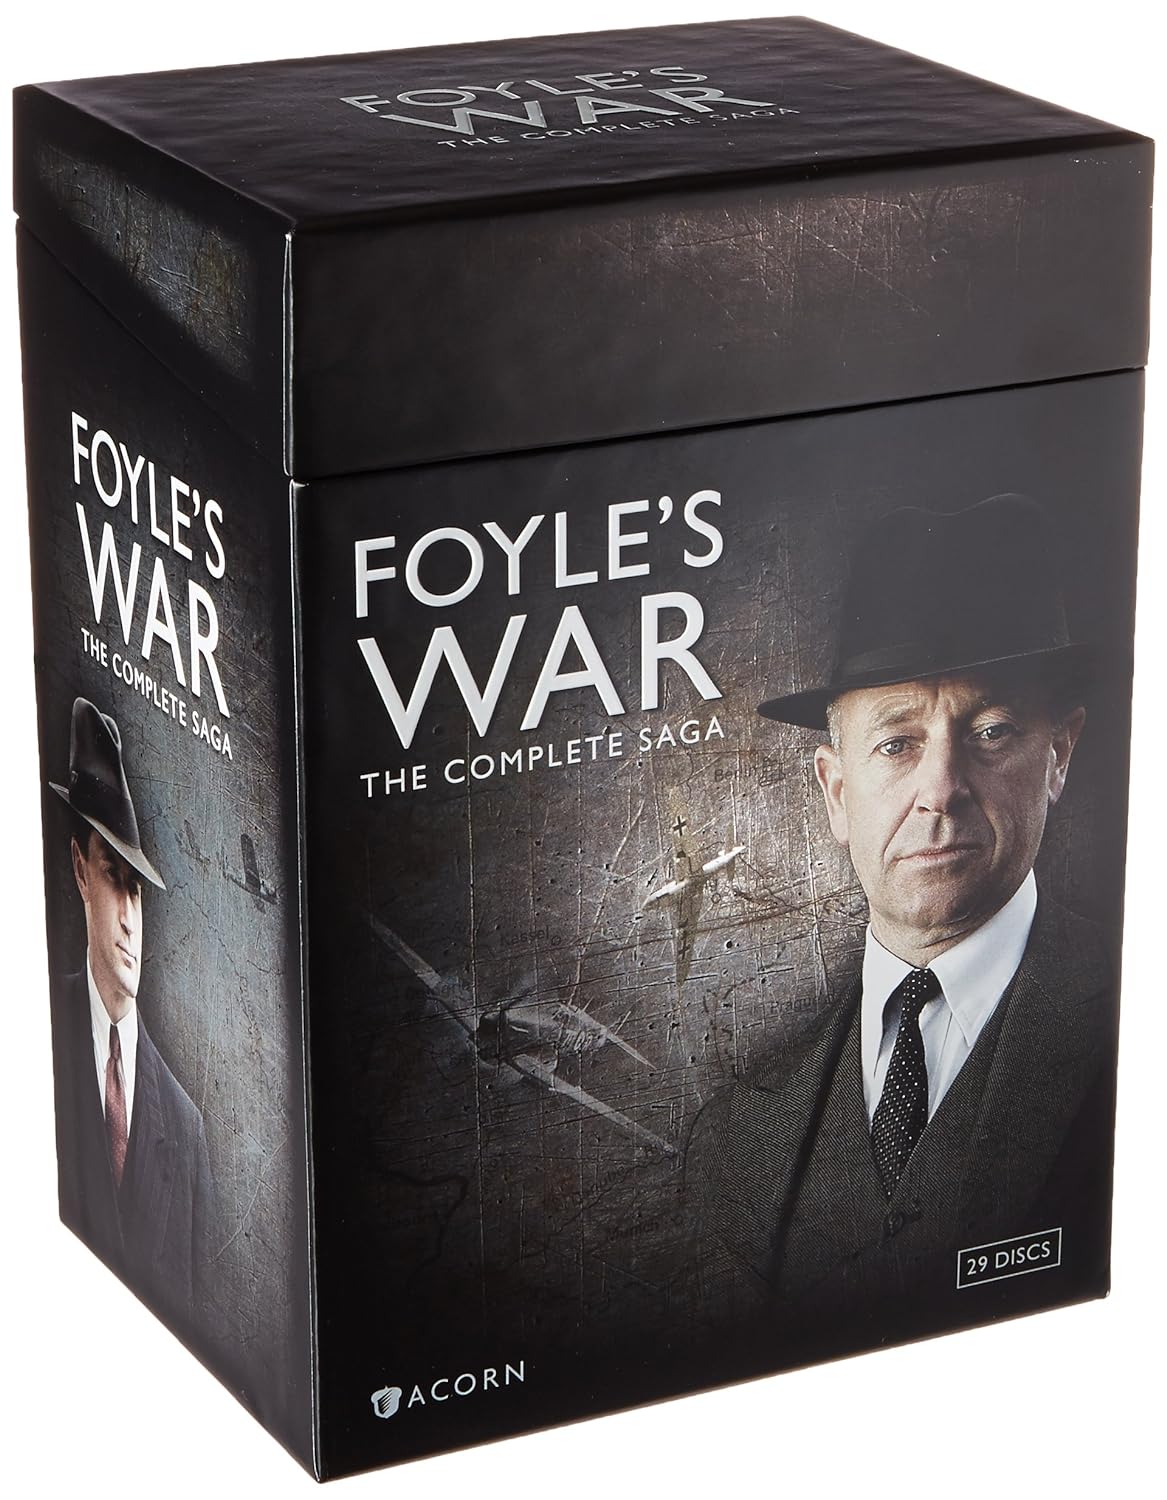 Foyle's War the Complete Saga DVDs